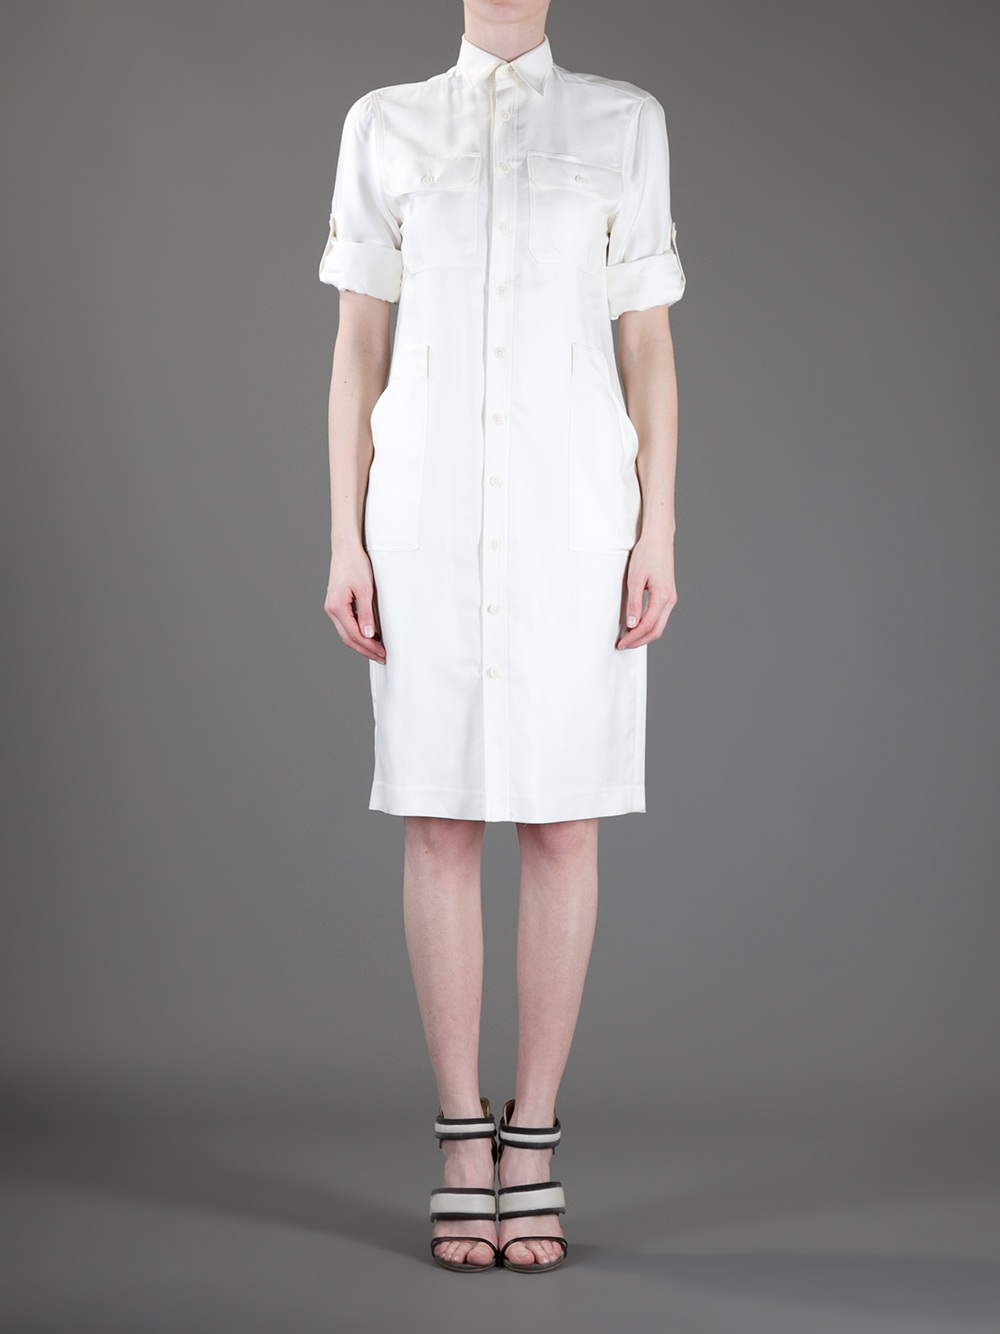 Lyst Ralph  lauren  black label Shirt  Dress  in White 